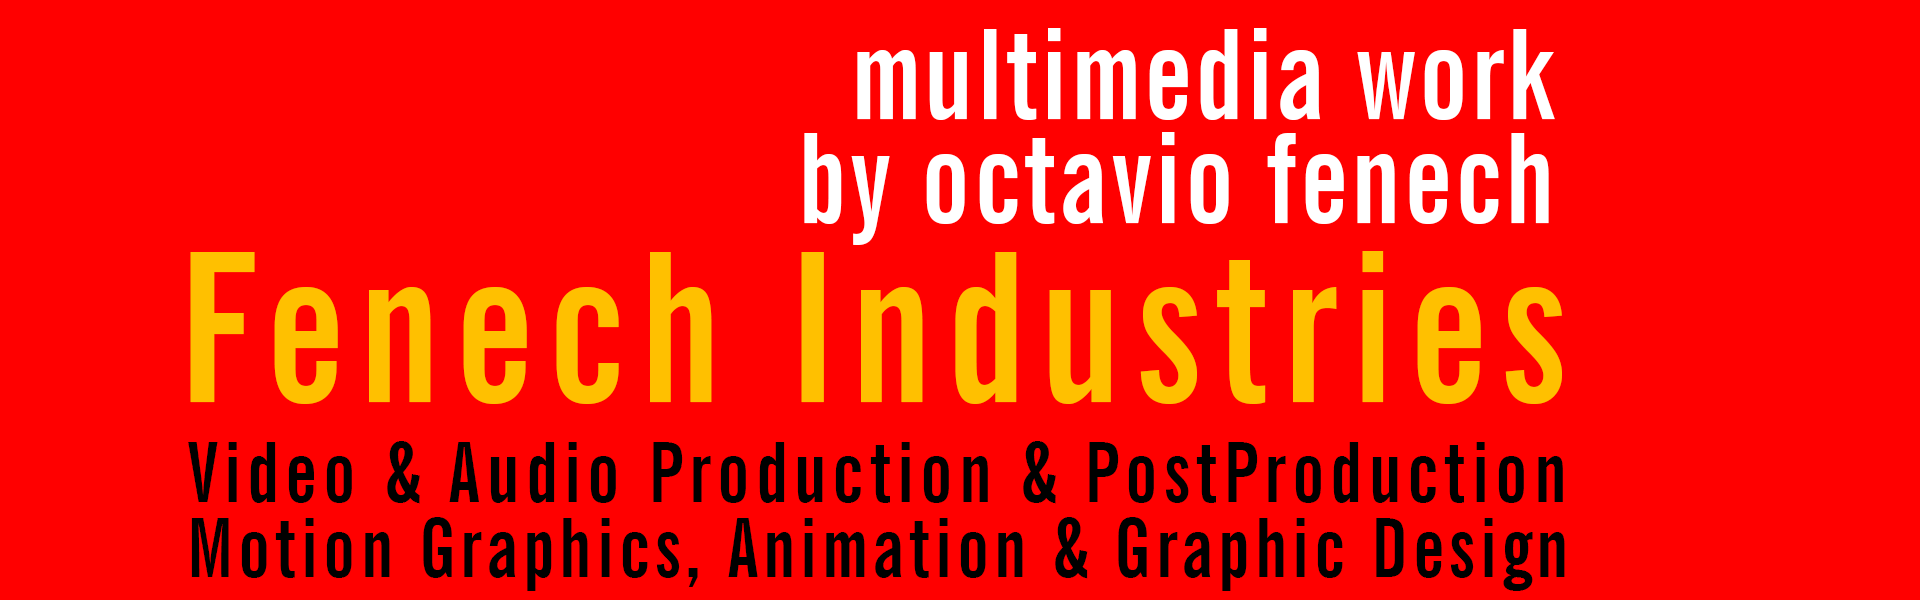 Fenech Industries: The multimedia Work of Octavio Fenech